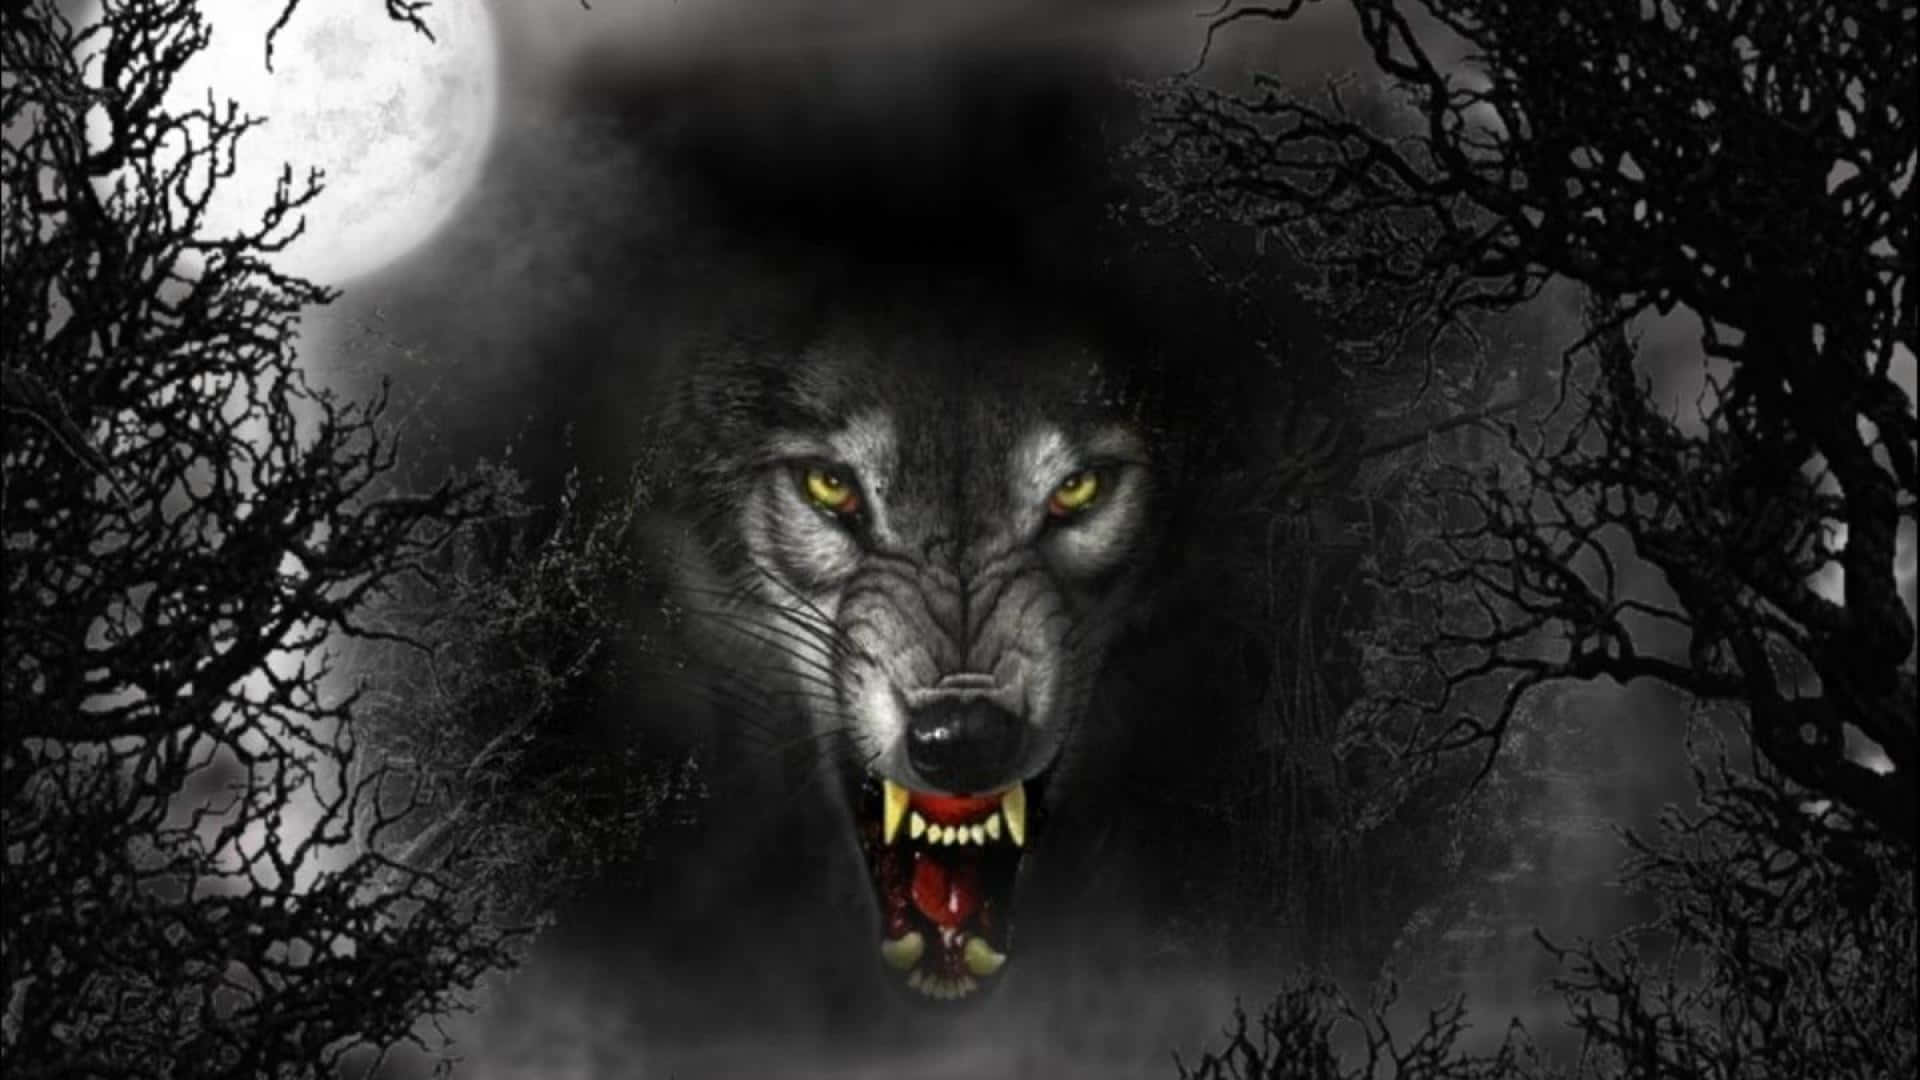 A Scary Werewolf Lurks in the Shadows